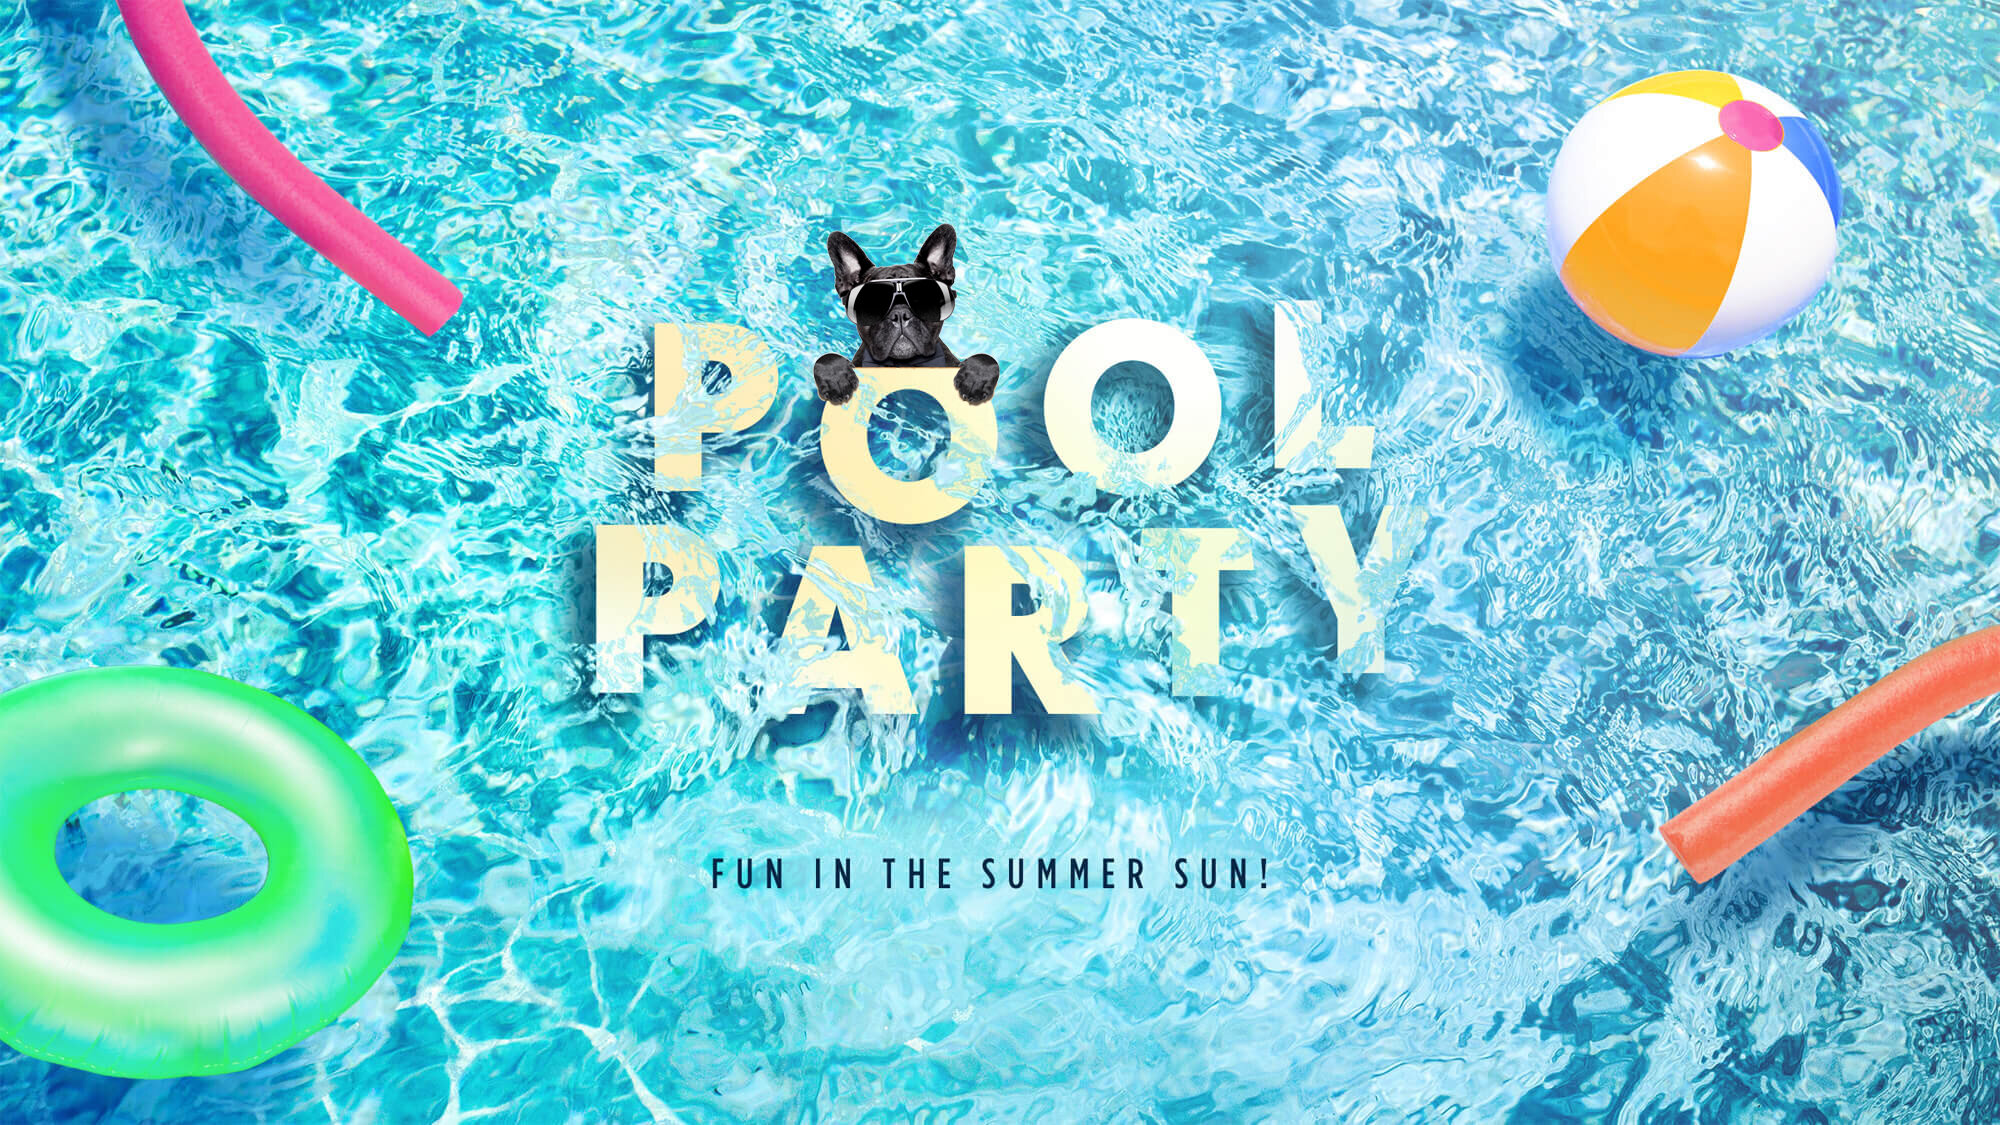 pet a palooza pool party.jpg